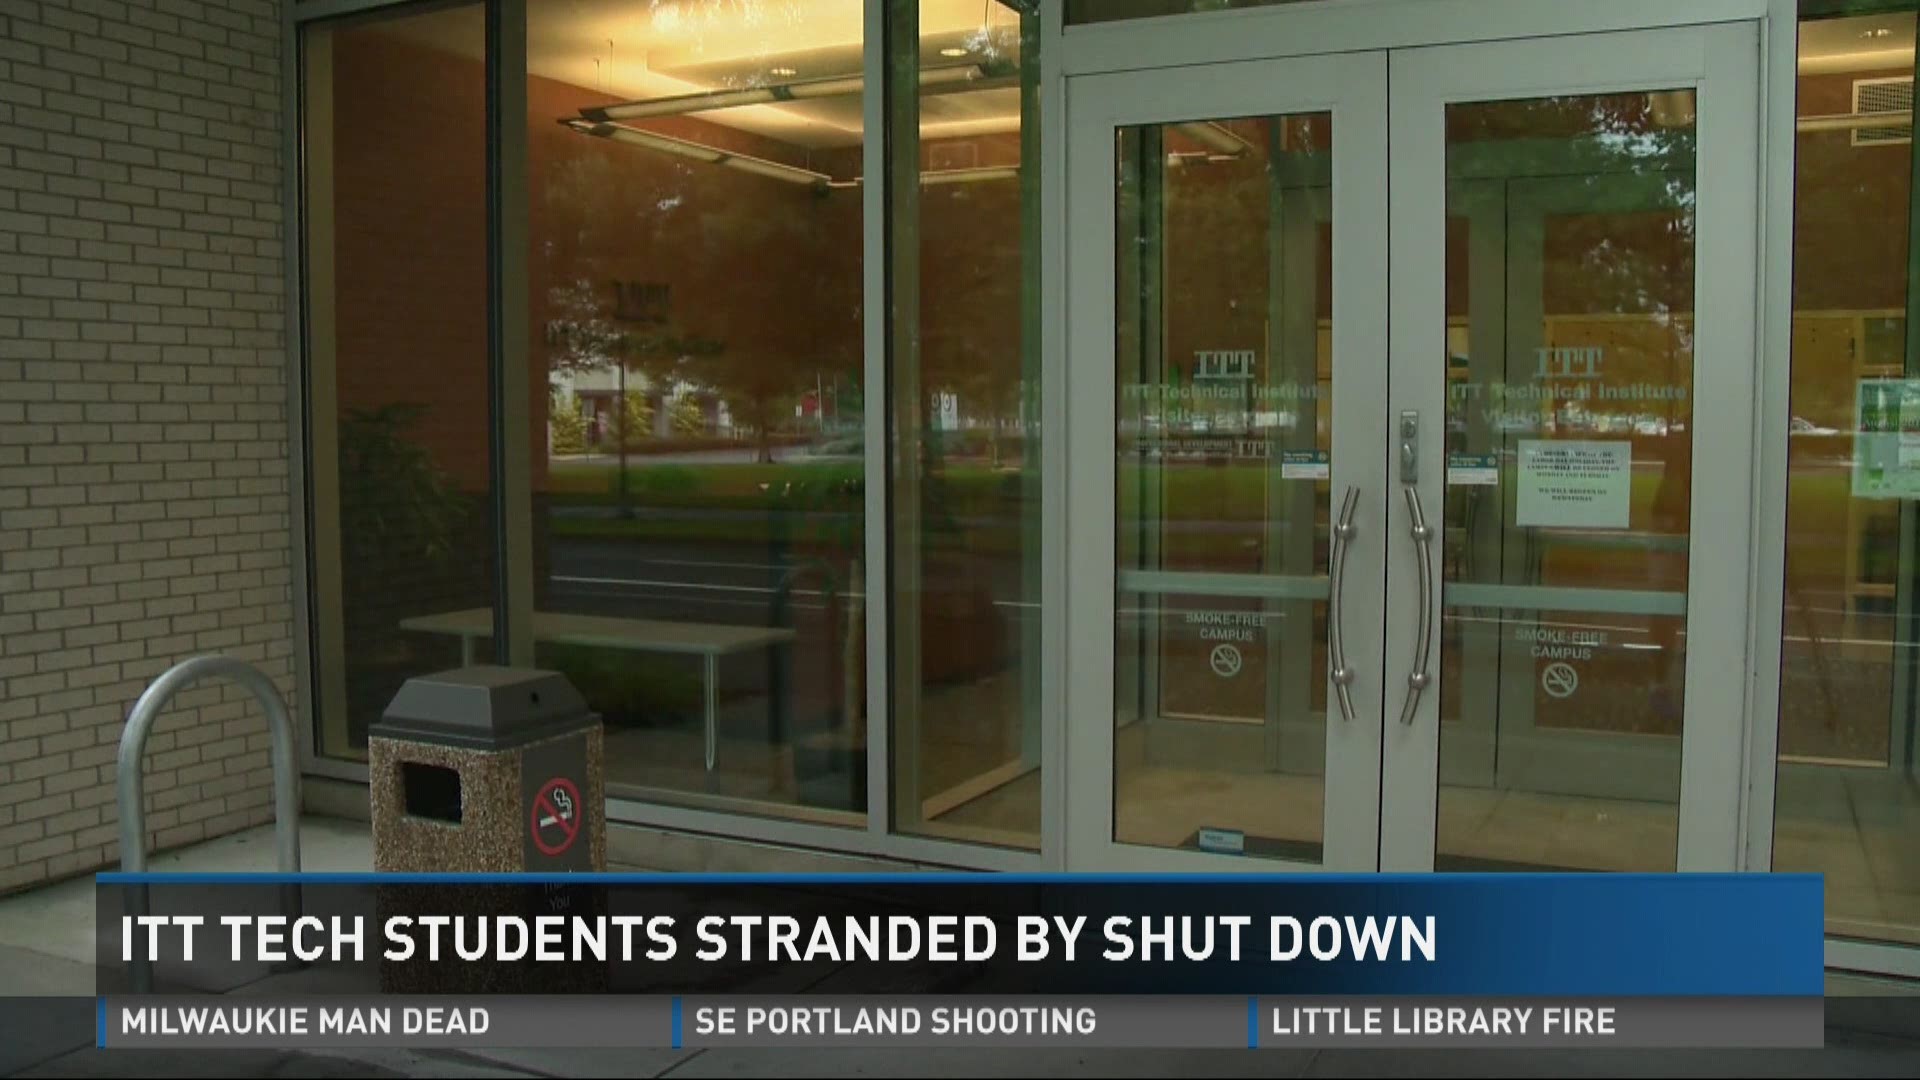 ITT Tech students stranded by shut down